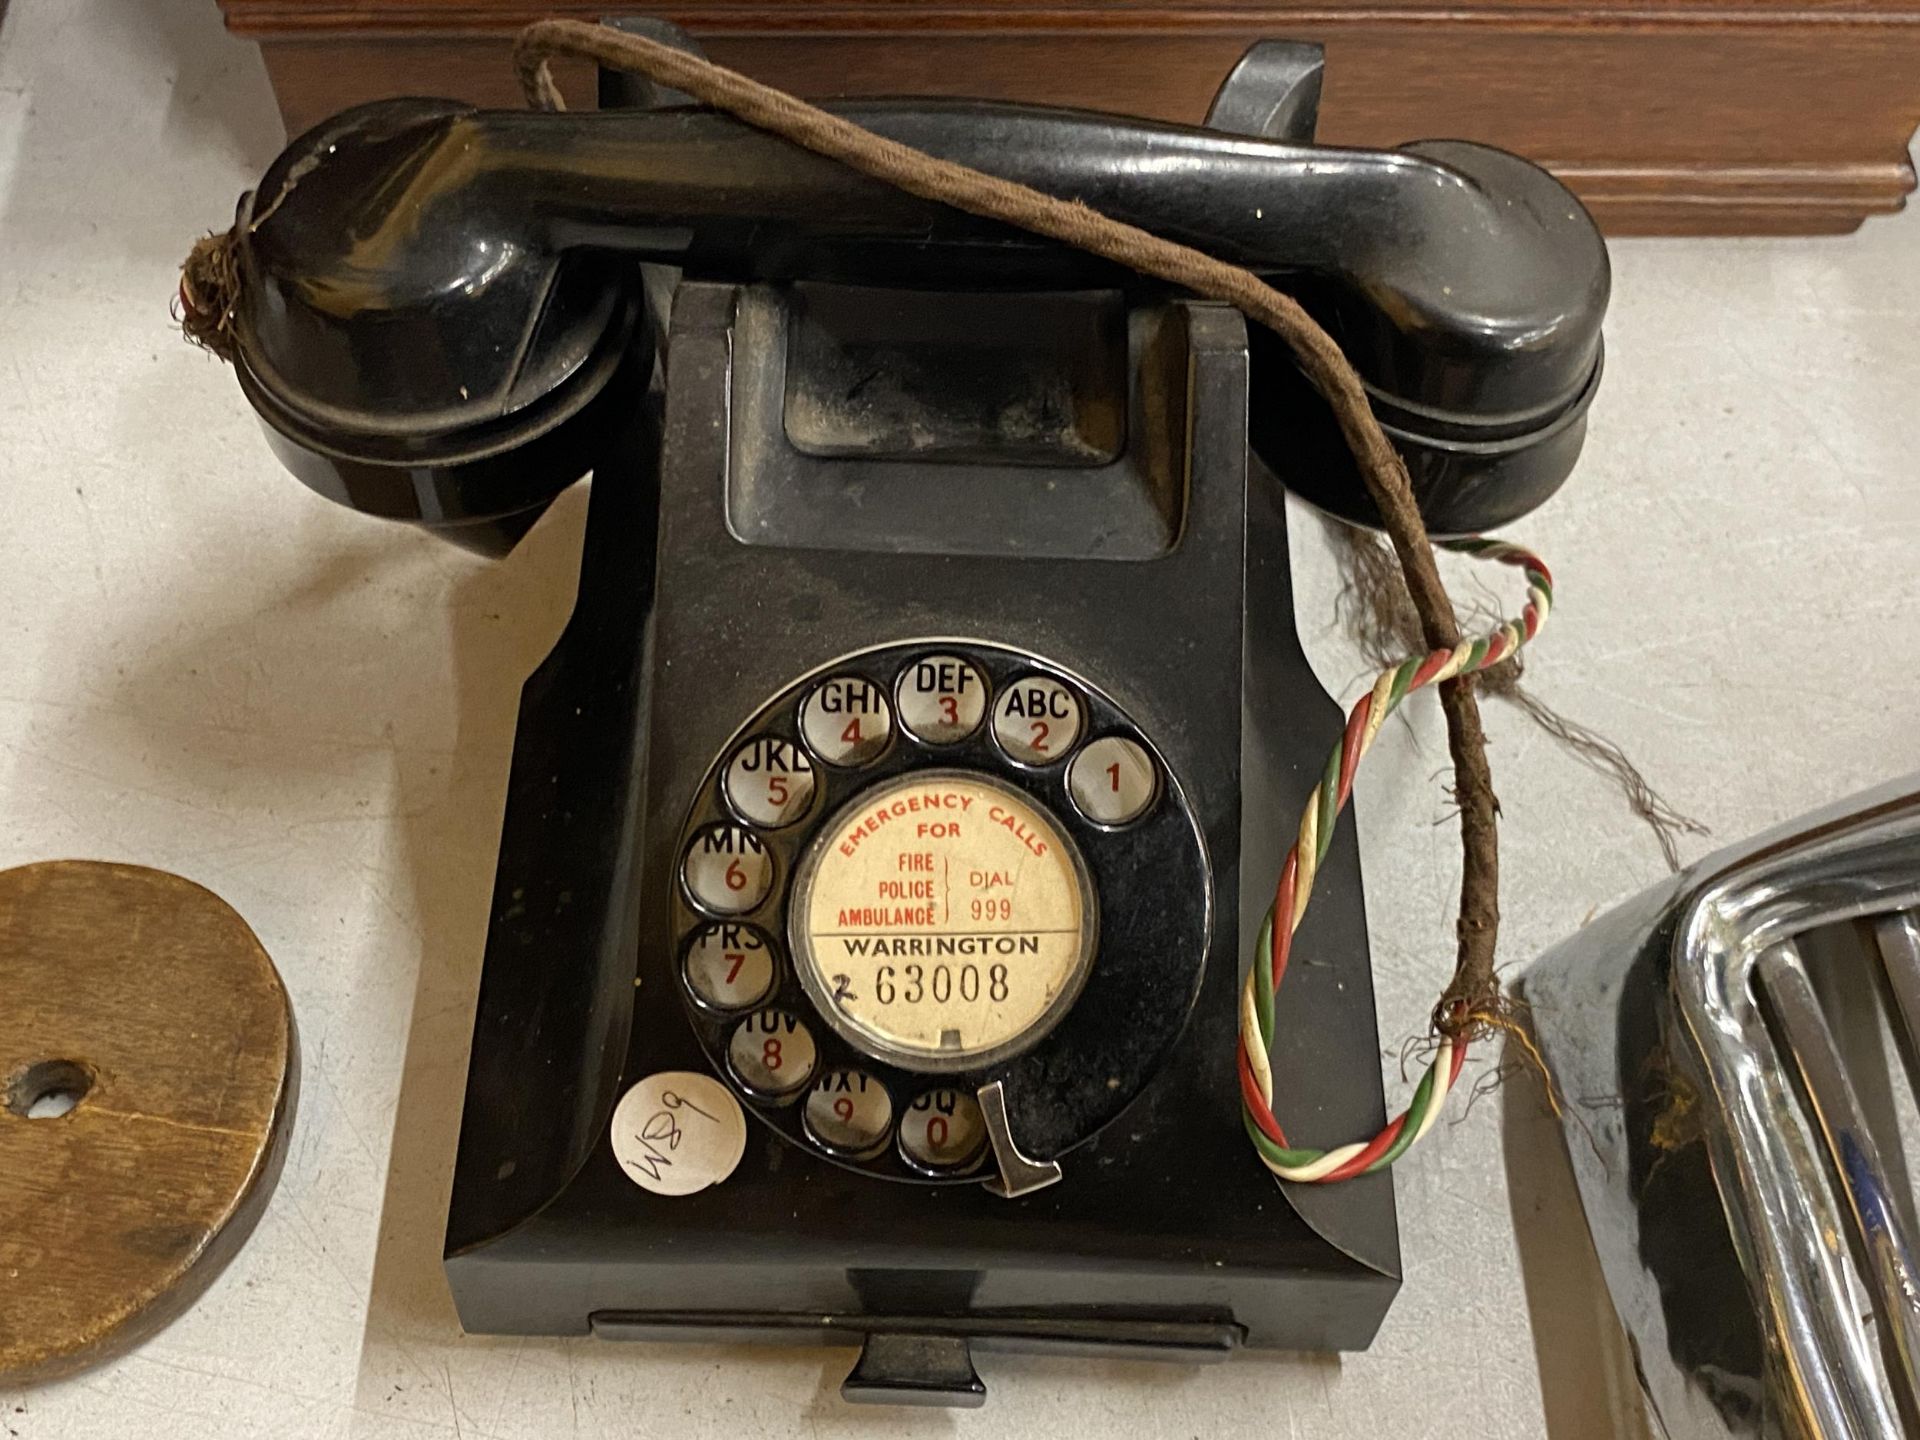 A VINTAGE BLACK BAKELITE TELEPHONE